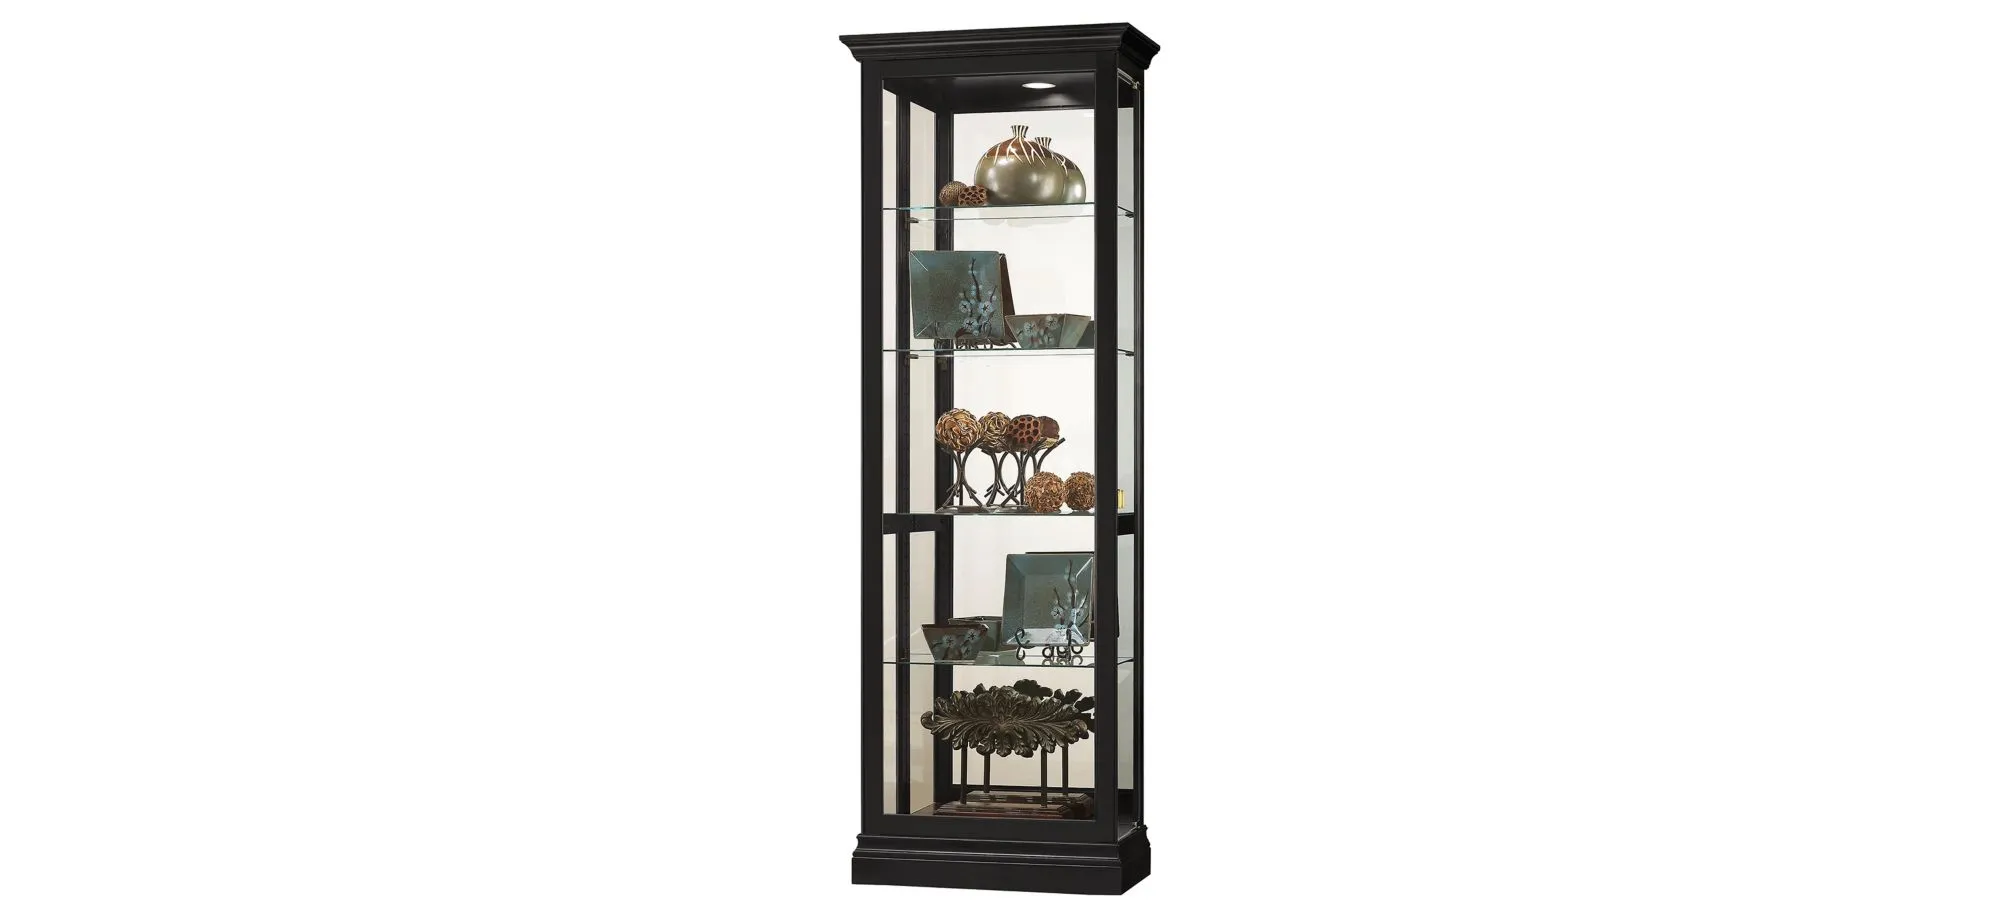 Brantley Curio Cabinet in Black Satin by Howard Miller Clock